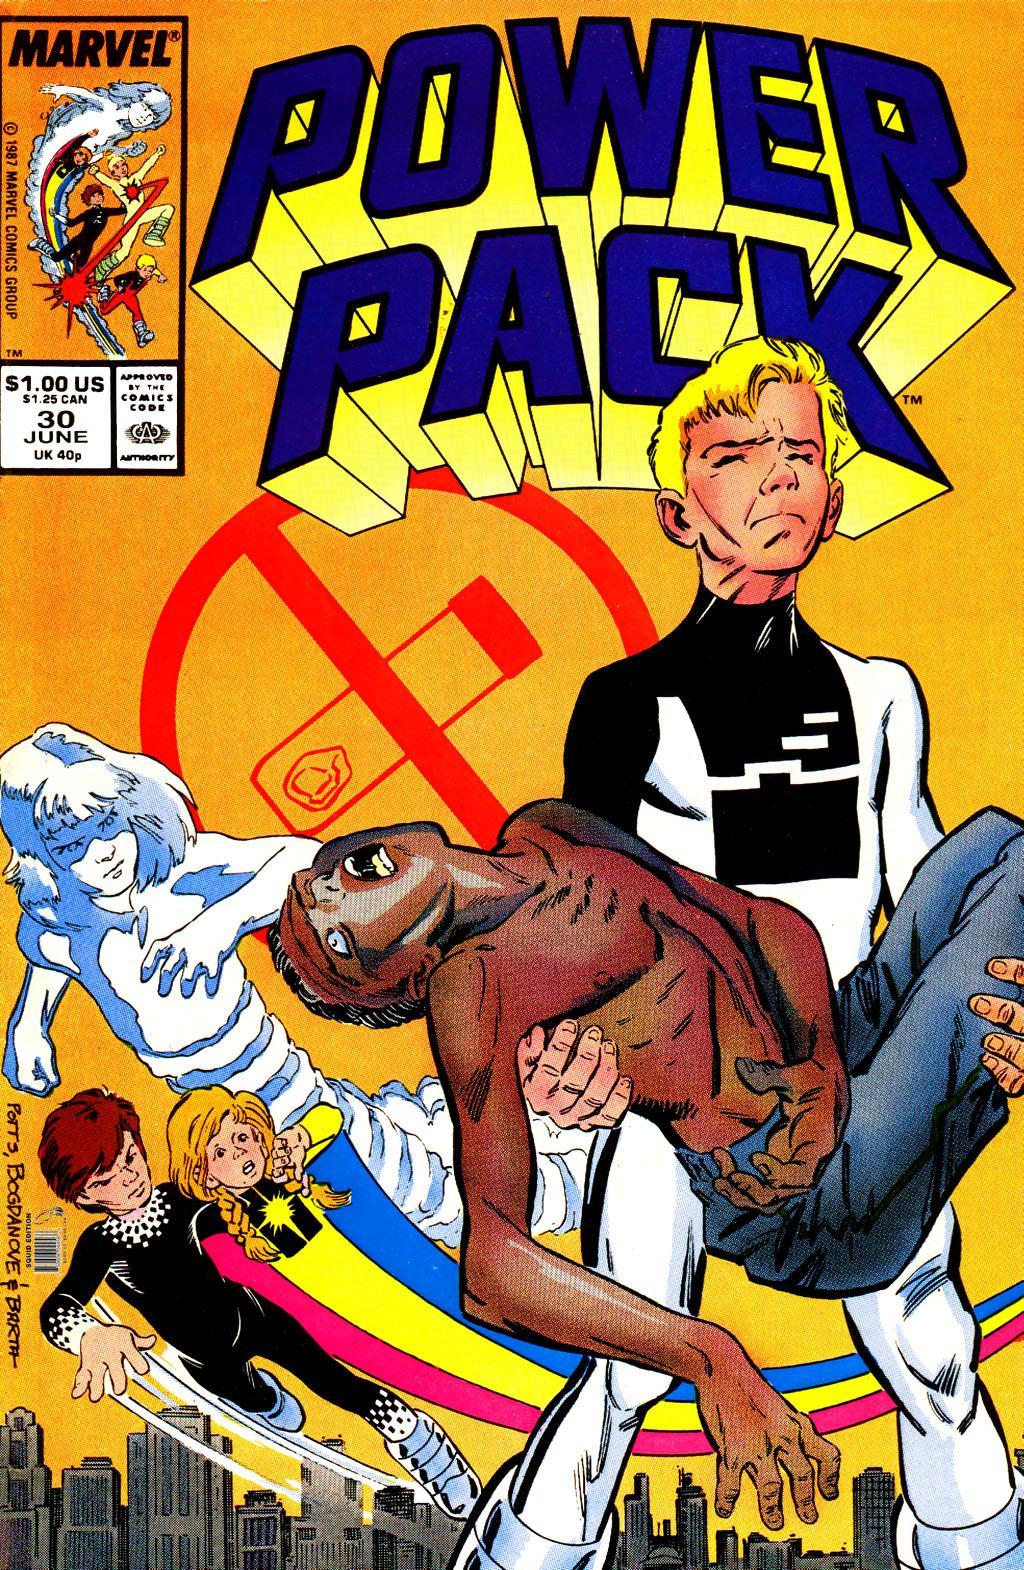 Power Pack комикс. Комикс w. Эллиот Франклин Марвел. Power Pack Marvel Vintage. Power packing комиксы